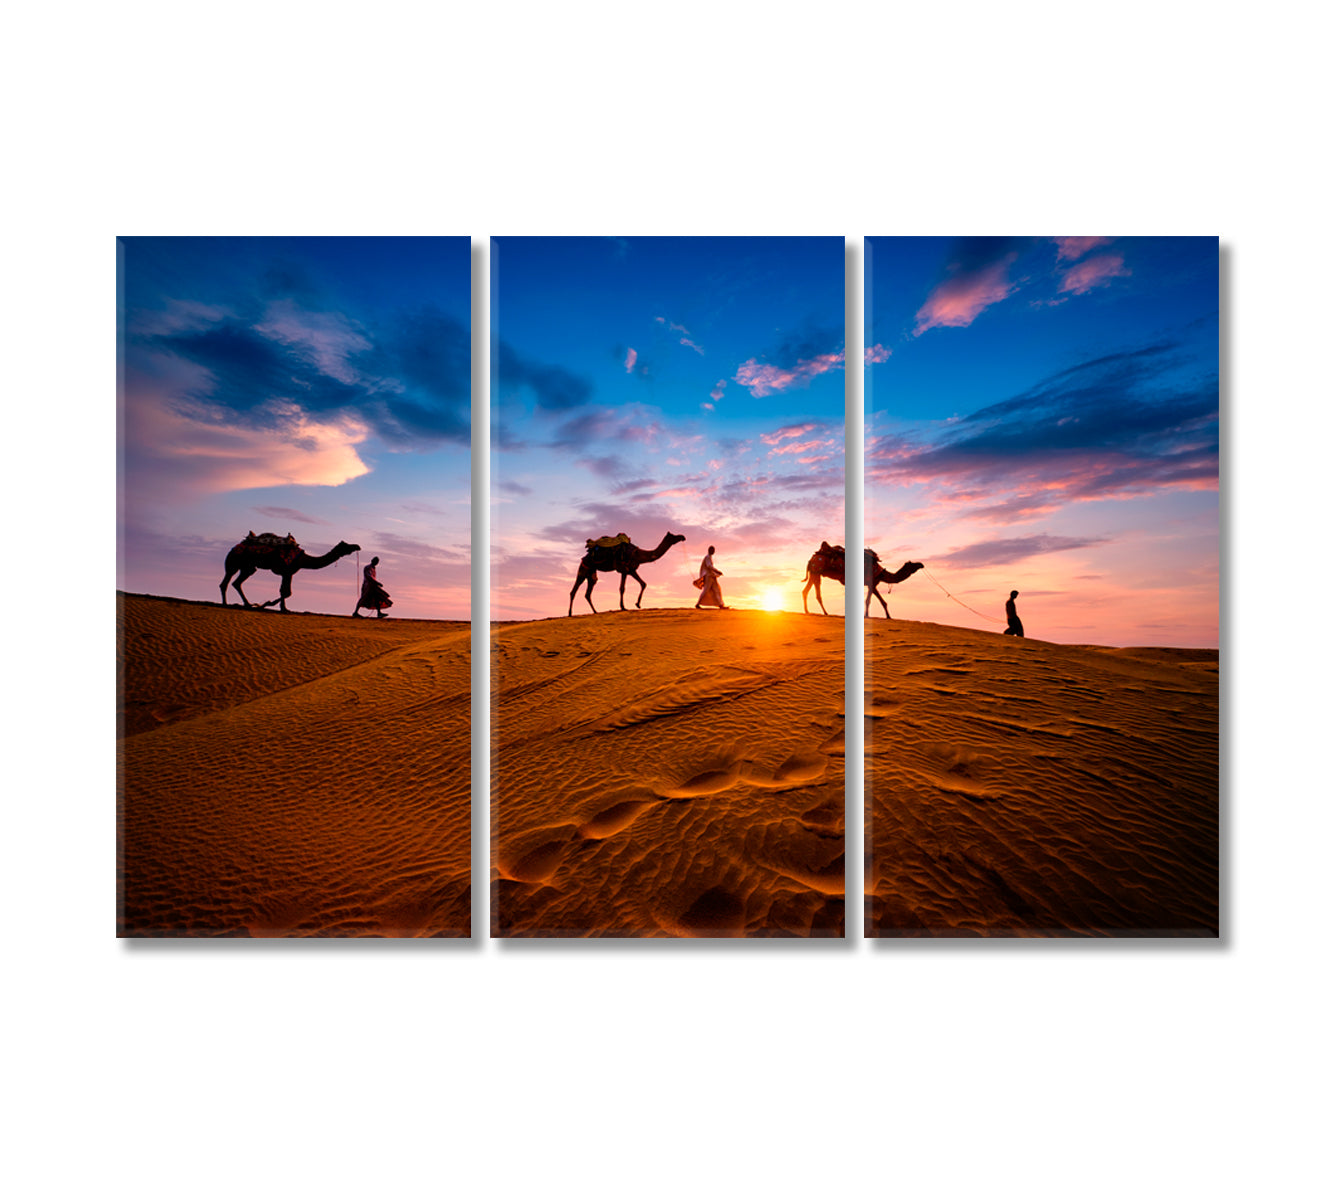 Camel Caravan Silhouette in Desert at Sunset Canvas Print-Canvas Print-CetArt-3 Panels-36x24 inches-CetArt